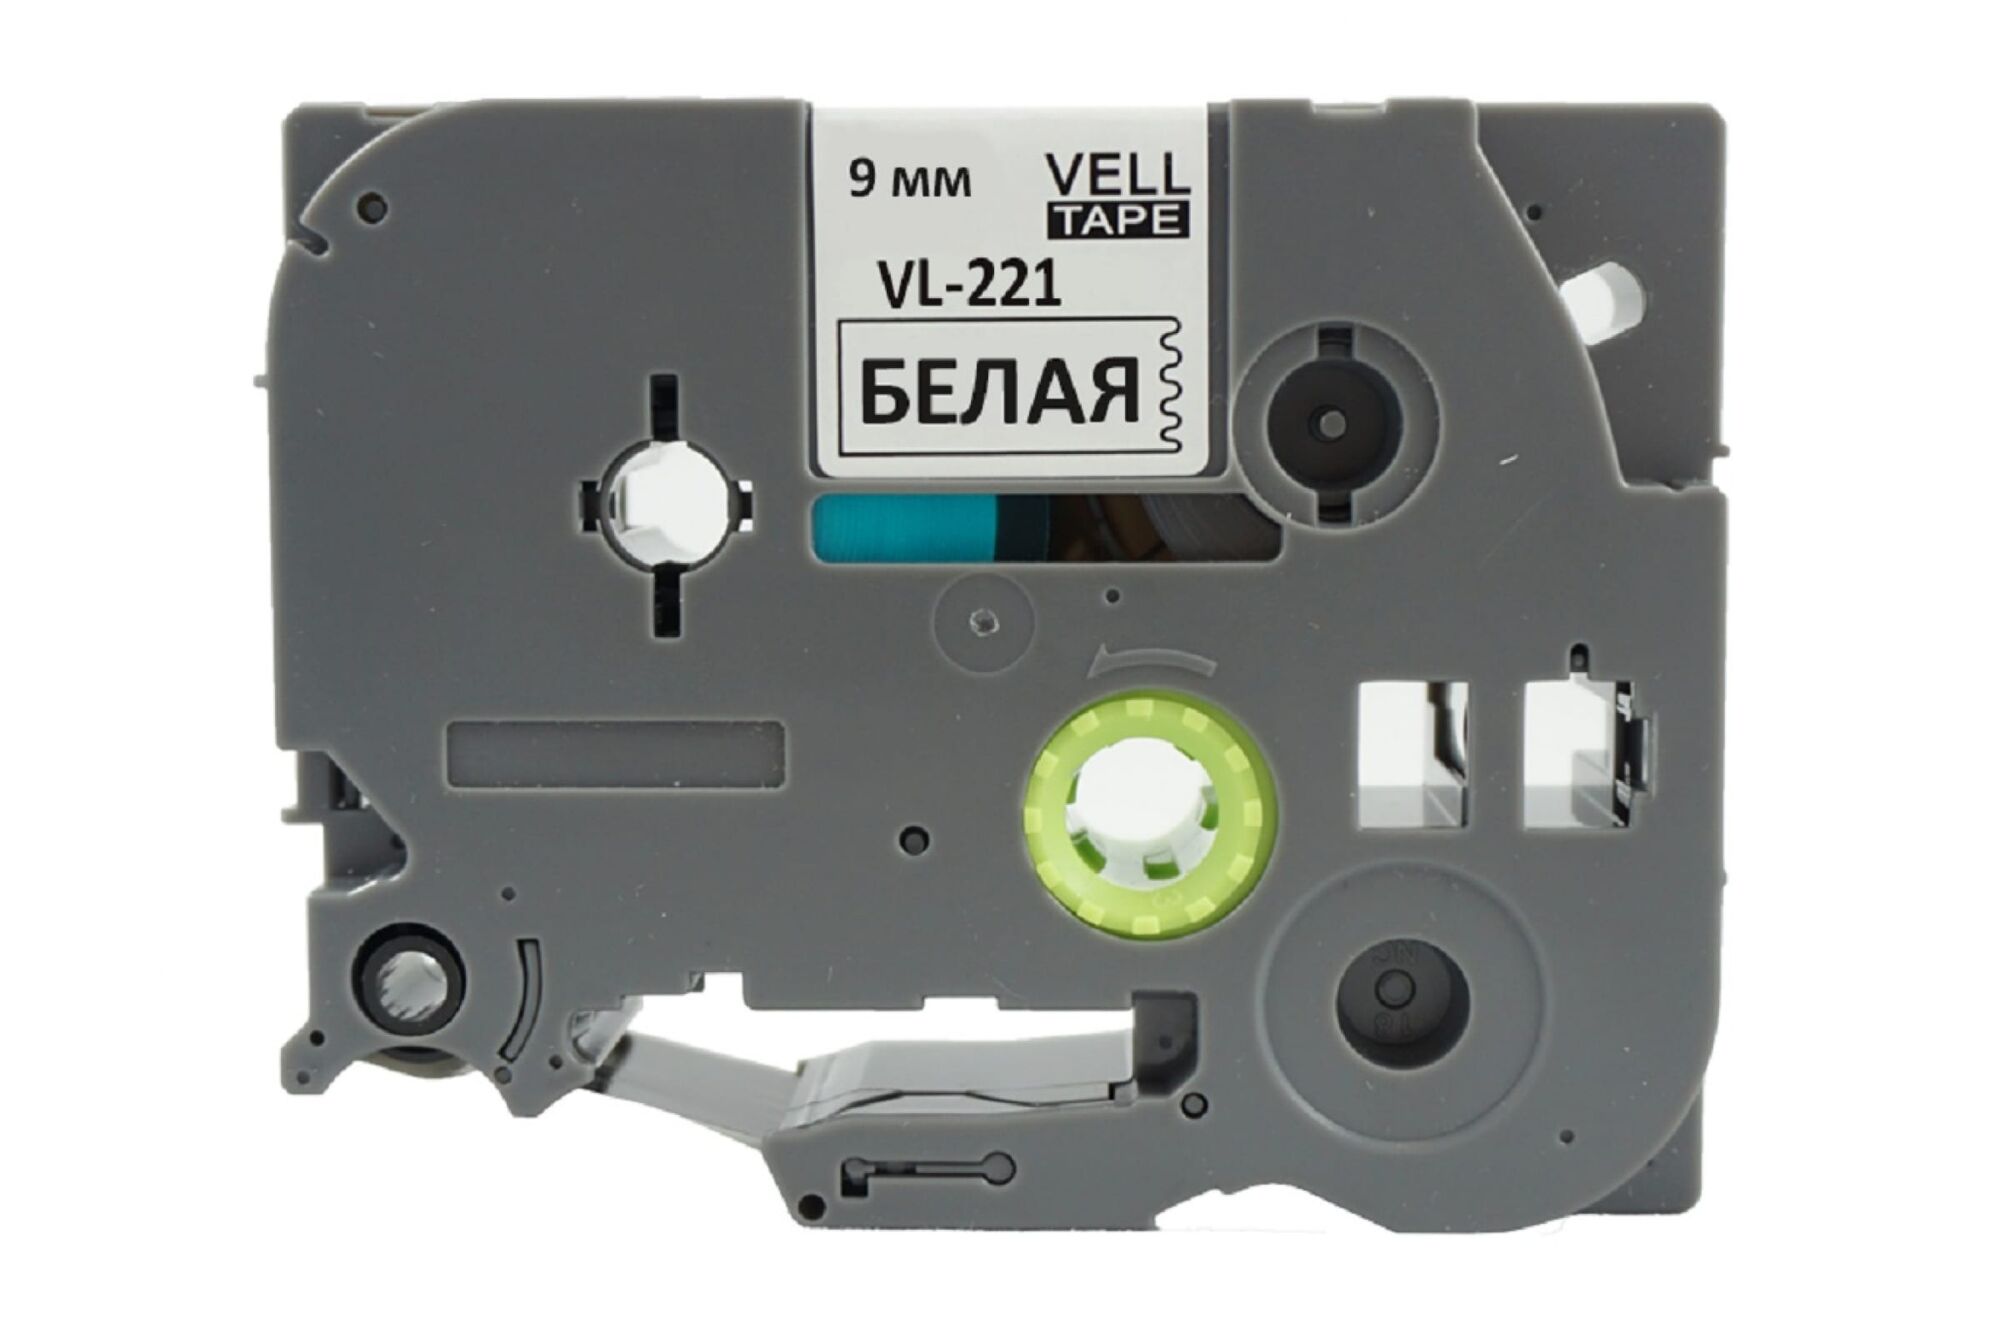 Лента Vell VL-221 9 мм, черный на белом для PT 1010/1280/D200/H105/E100/ D600/E300/2700/ P700/E550/9700, 221